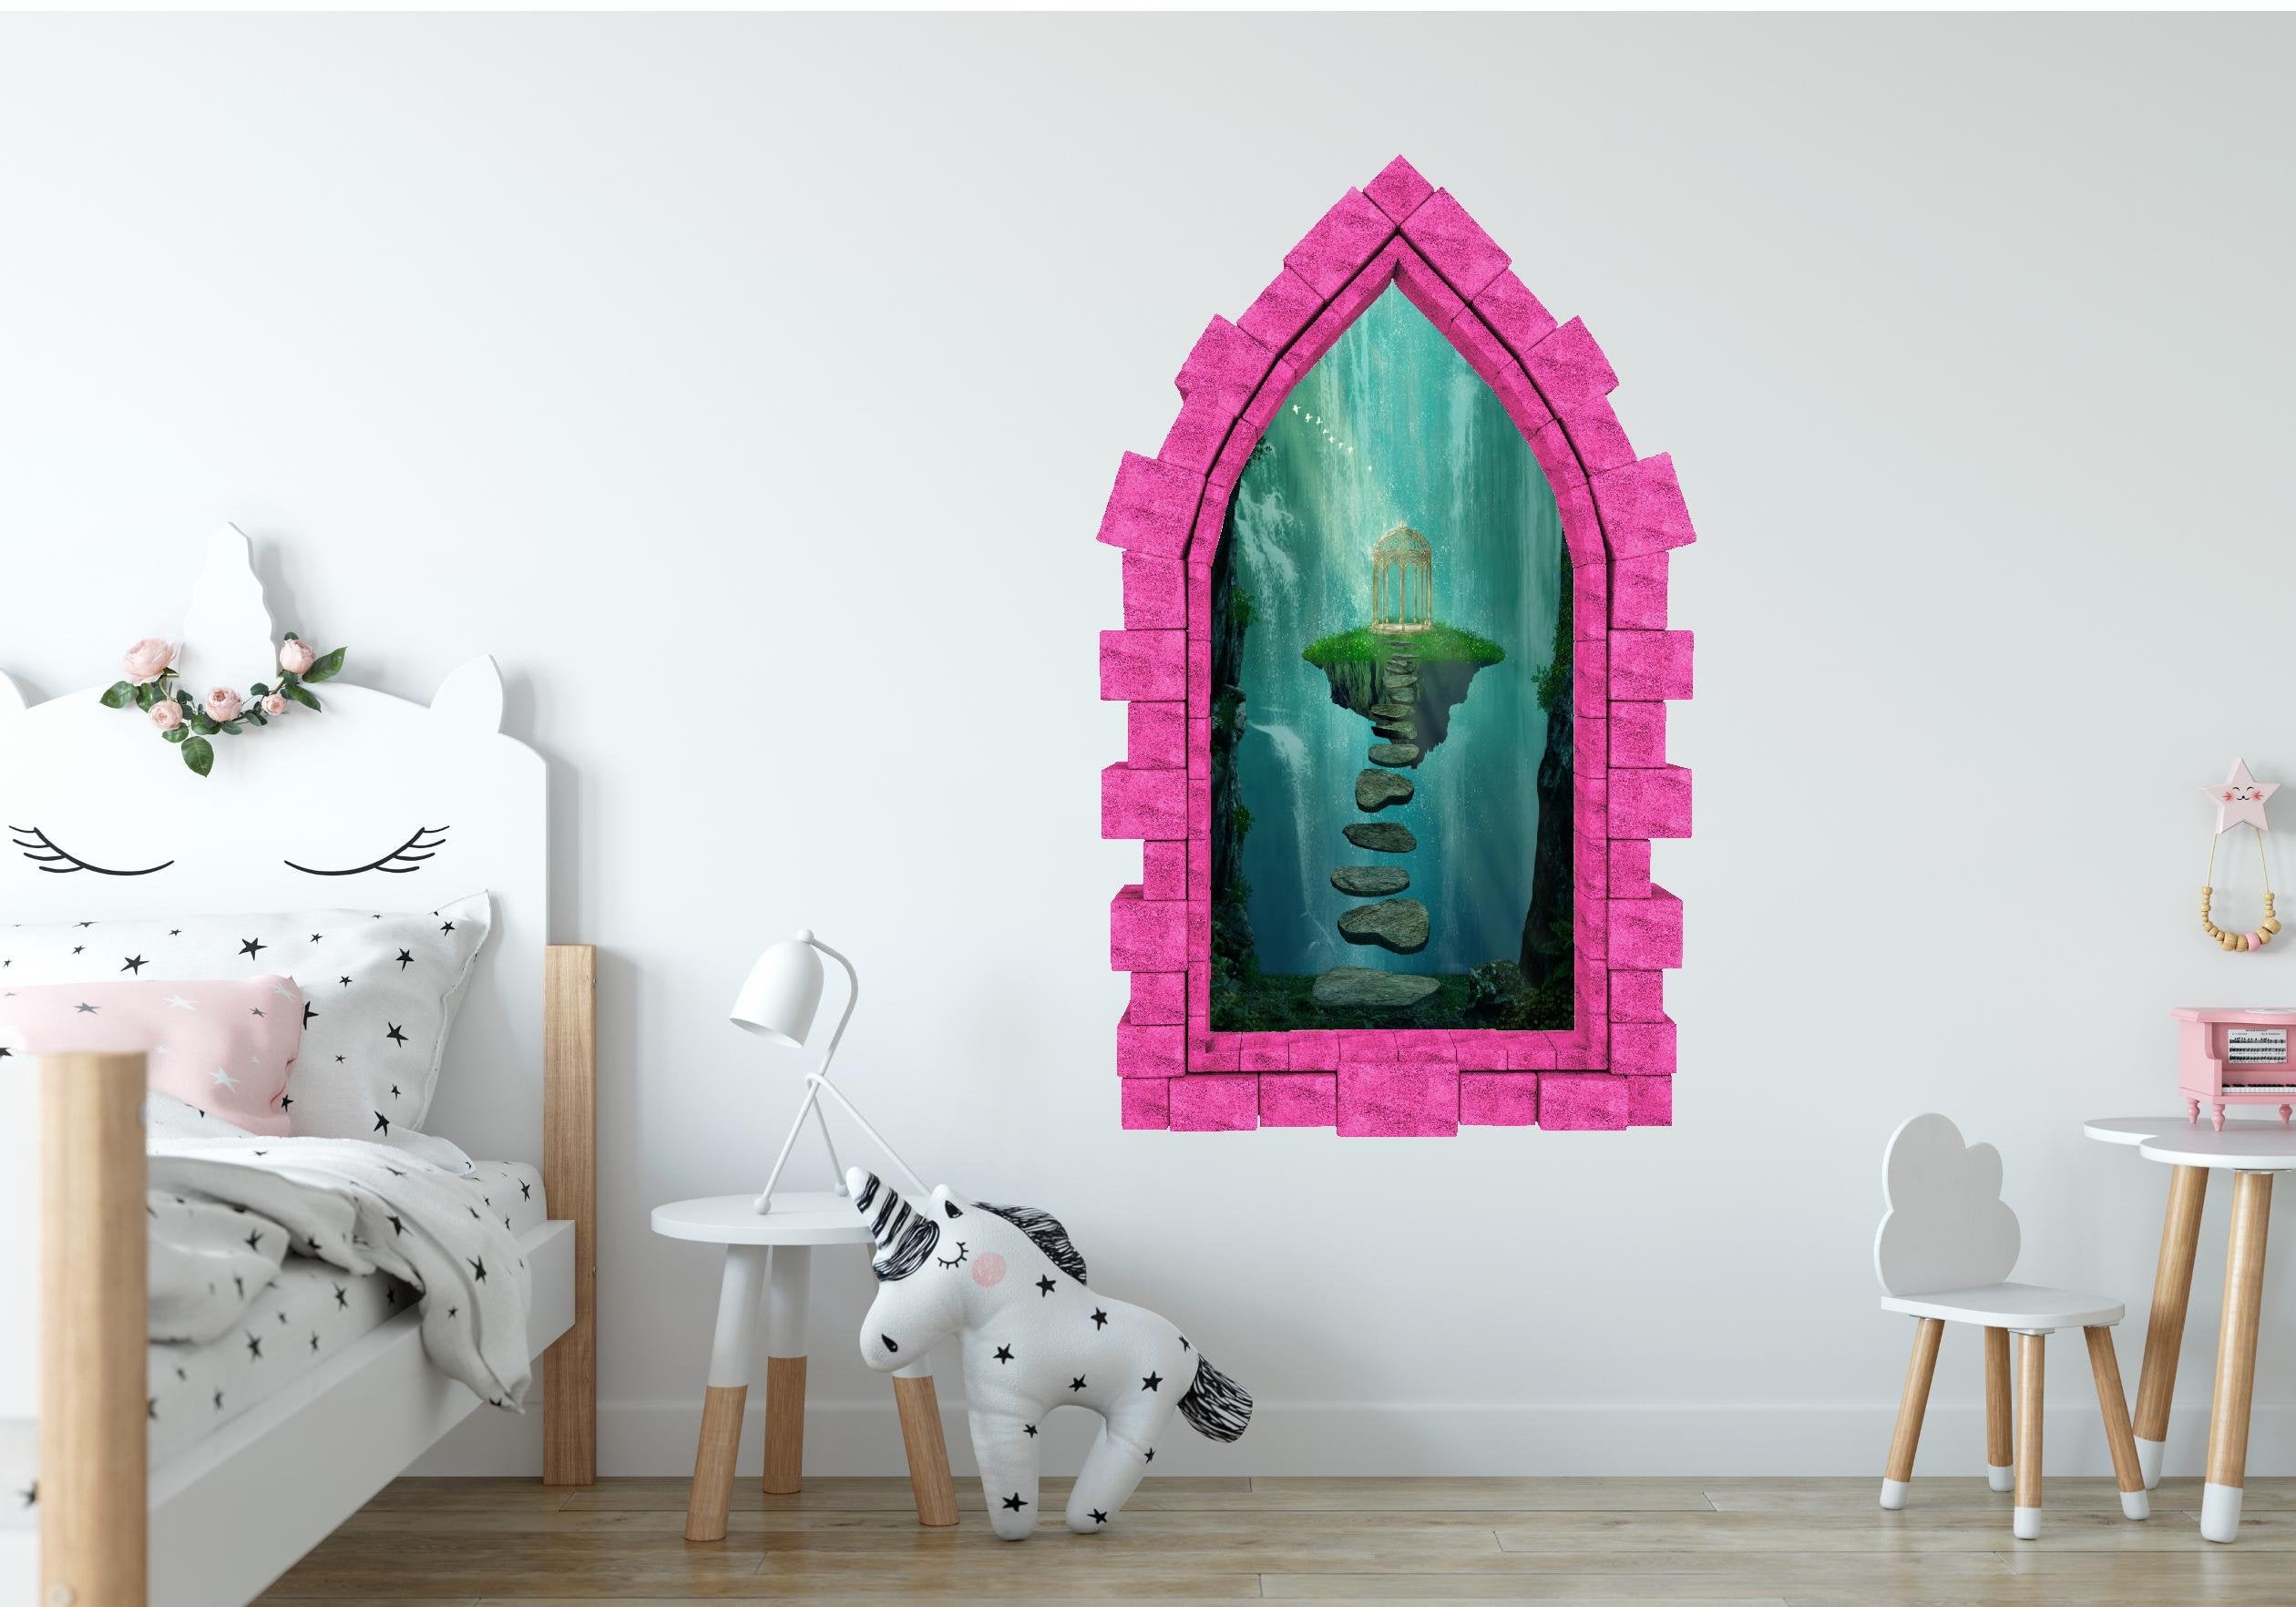 3D Castle Window Floating Gazebo Wall Decal Fantasy Removable Fabric Vinyl Wall Sticker